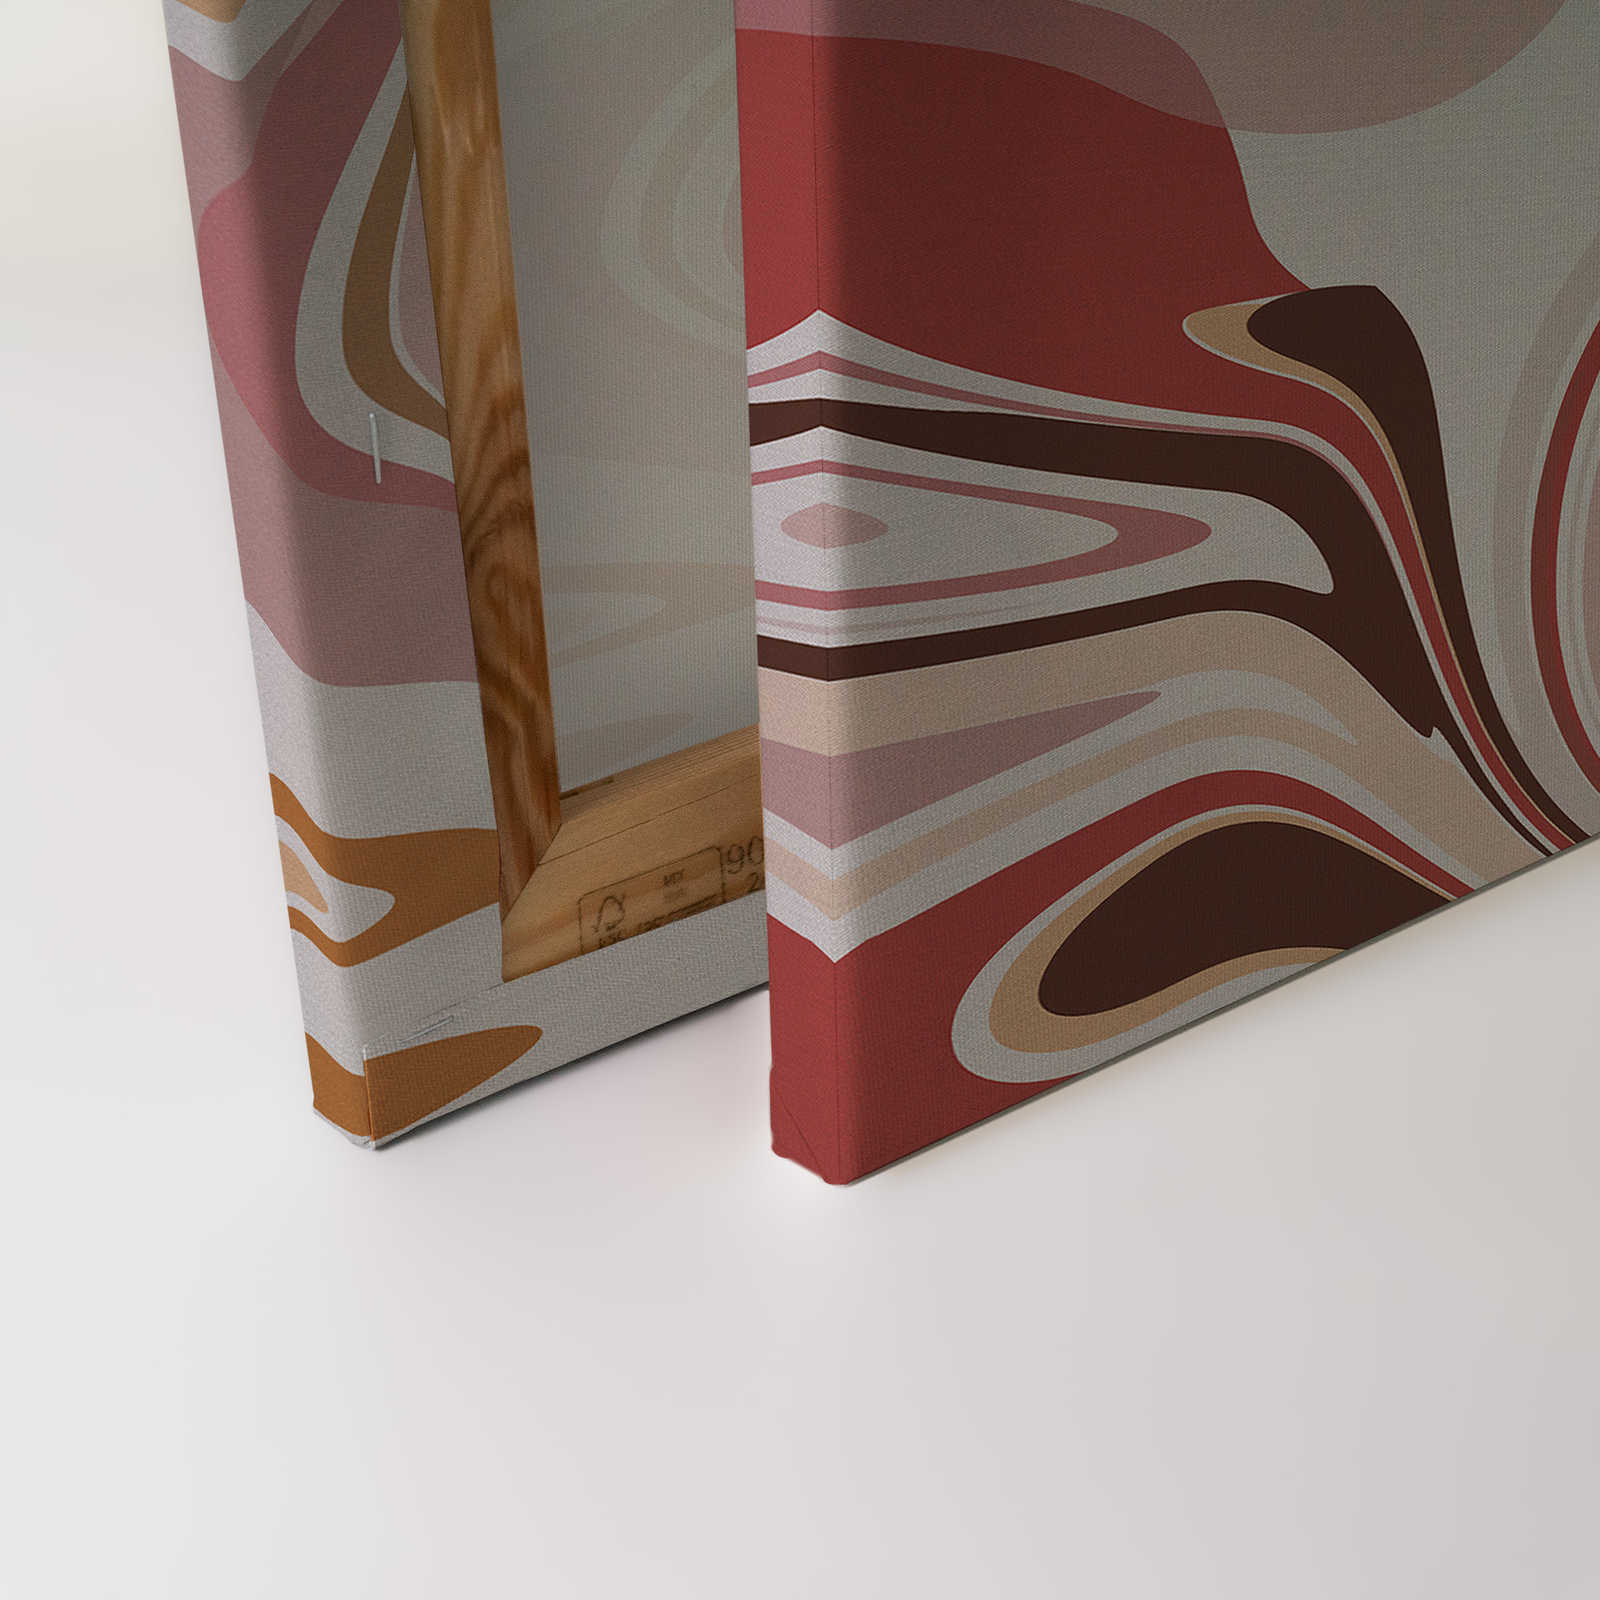             Leinwandbild mit abstraktem Farbmuster in warmen Farbtönen – 0,90 m x 0,60 m
        